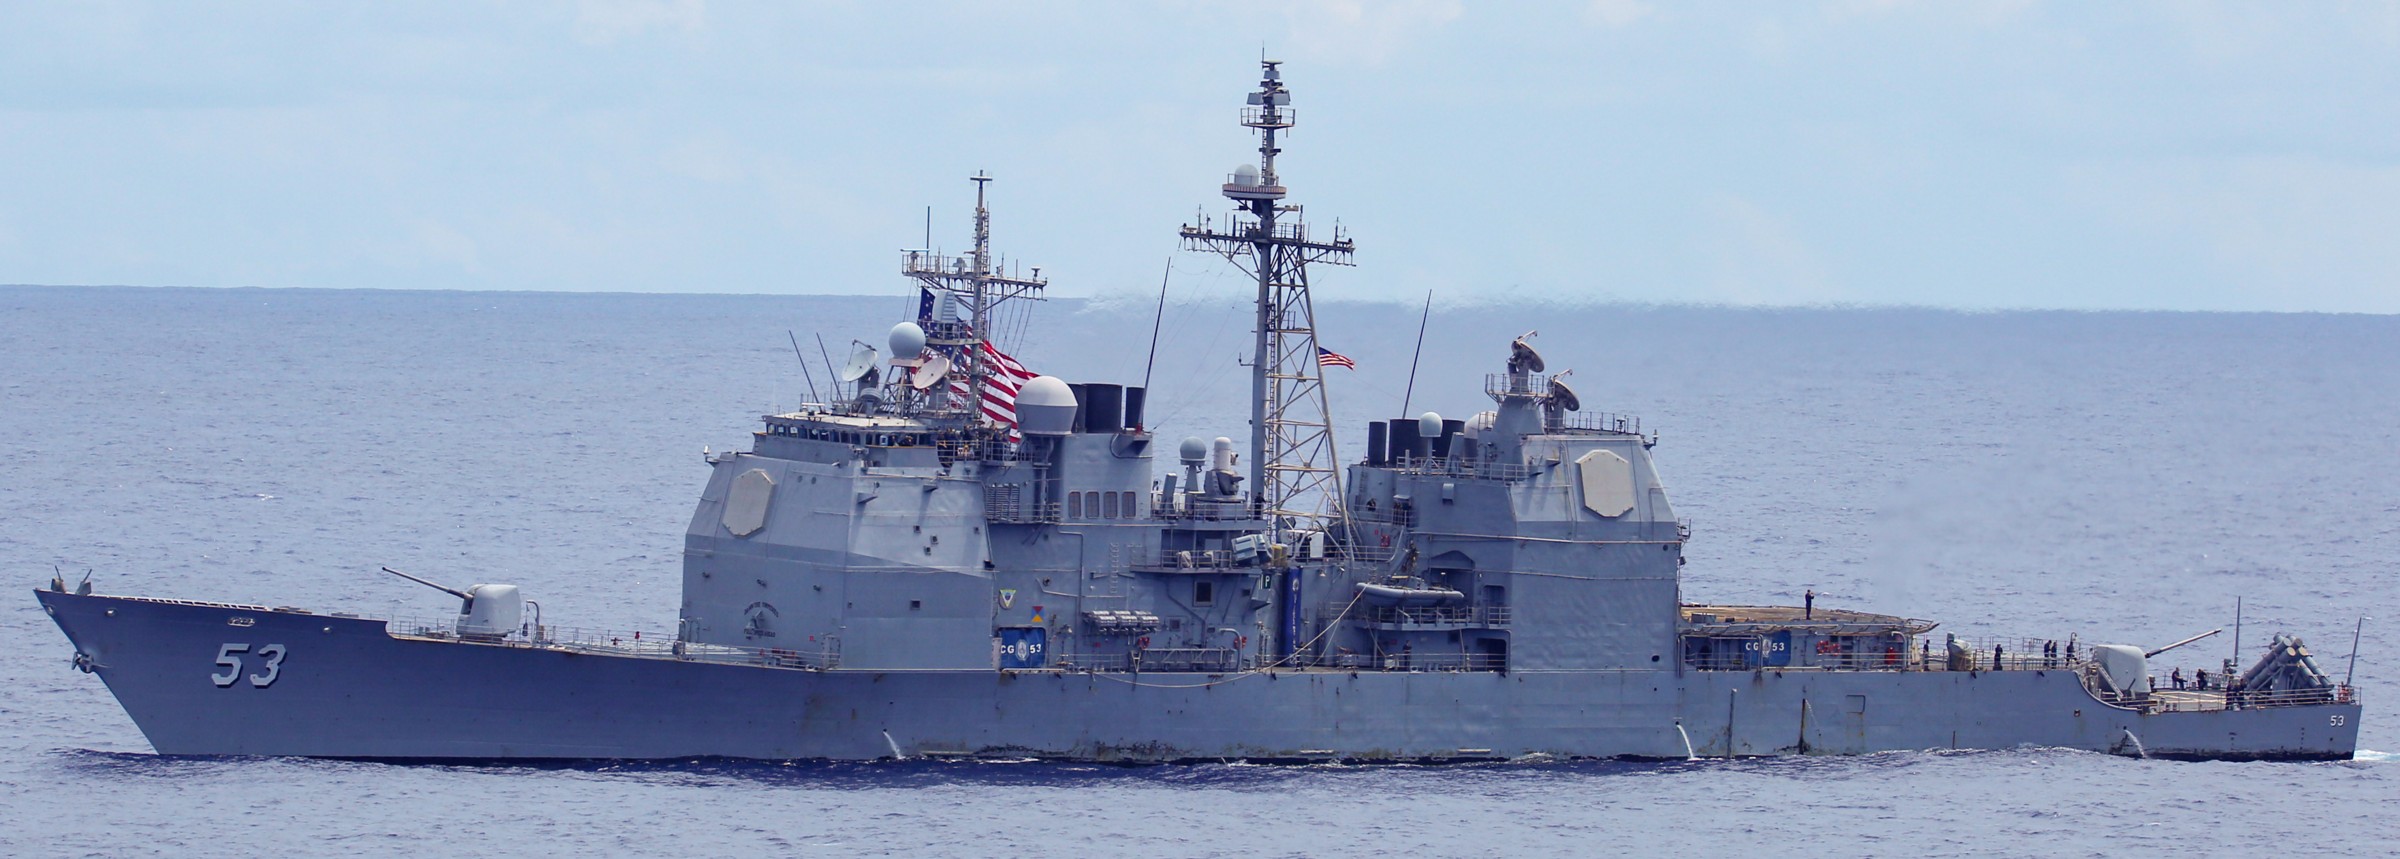 cg-53 uss mobile bay ticonderoga class guided missile cruiser aegis us navy exercise rimpac 2022